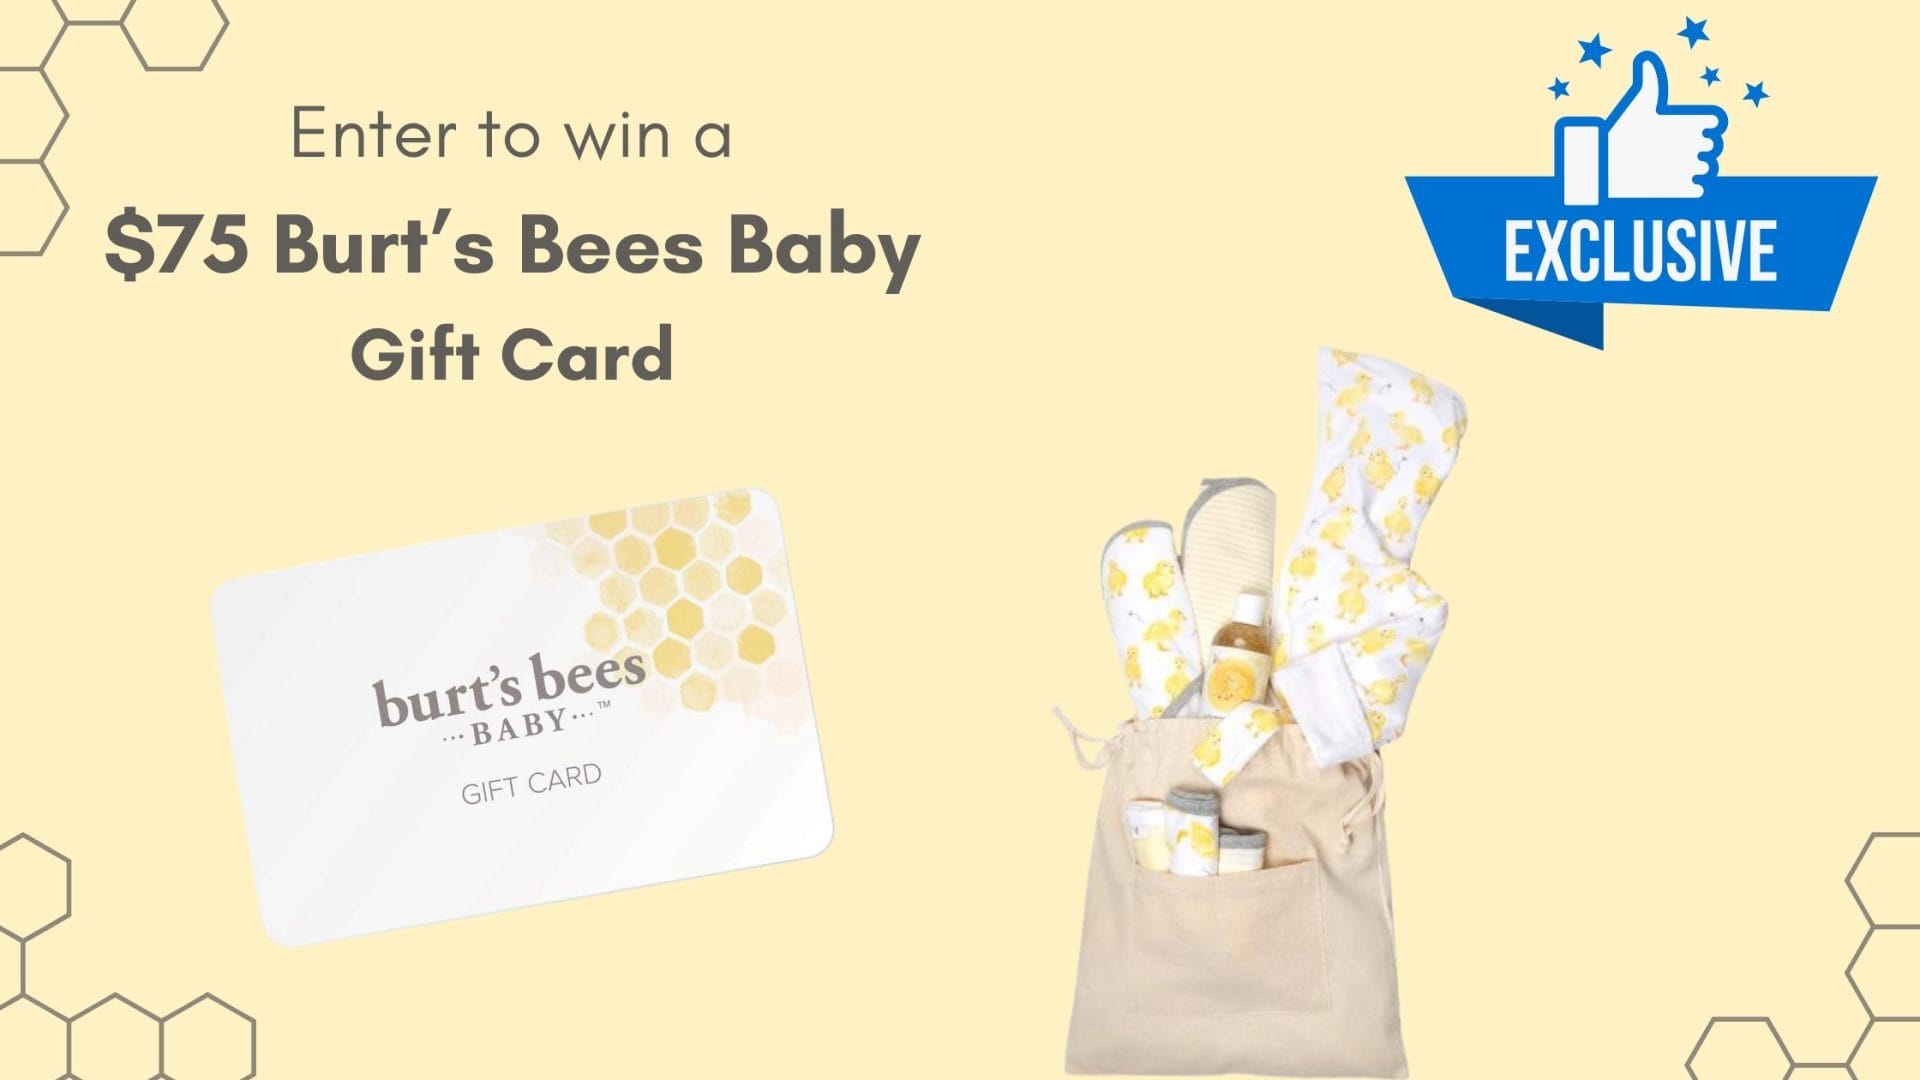 Burts Bees Baby Giveaway Promo Image